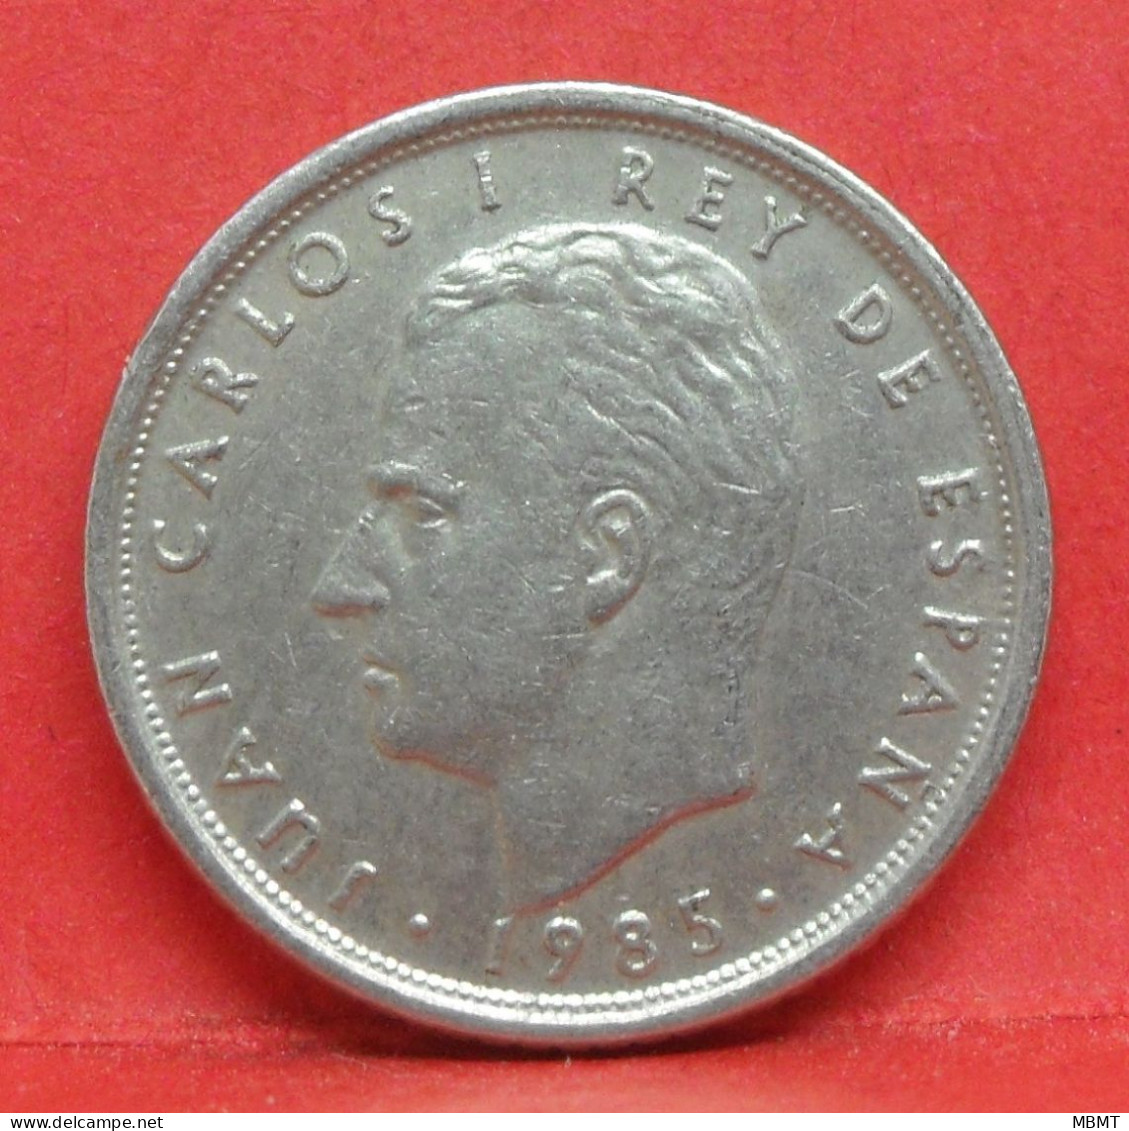 10 Pesetas 1985 - TTB - Pièce Monnaie Espagne - Article N°2422 - 10 Pesetas